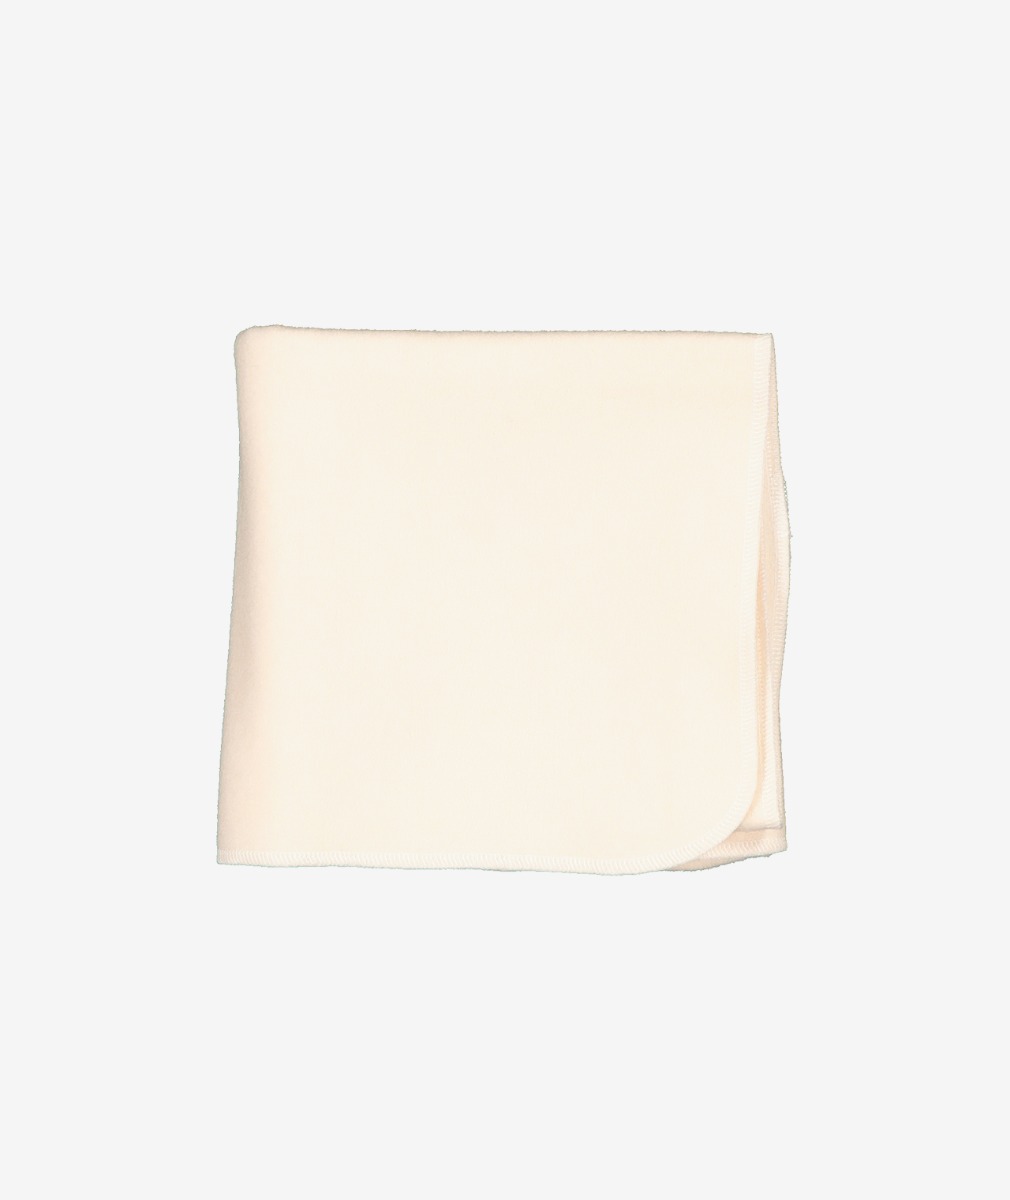 Swanndri Protect-A-Cot 100% Wool Blanket